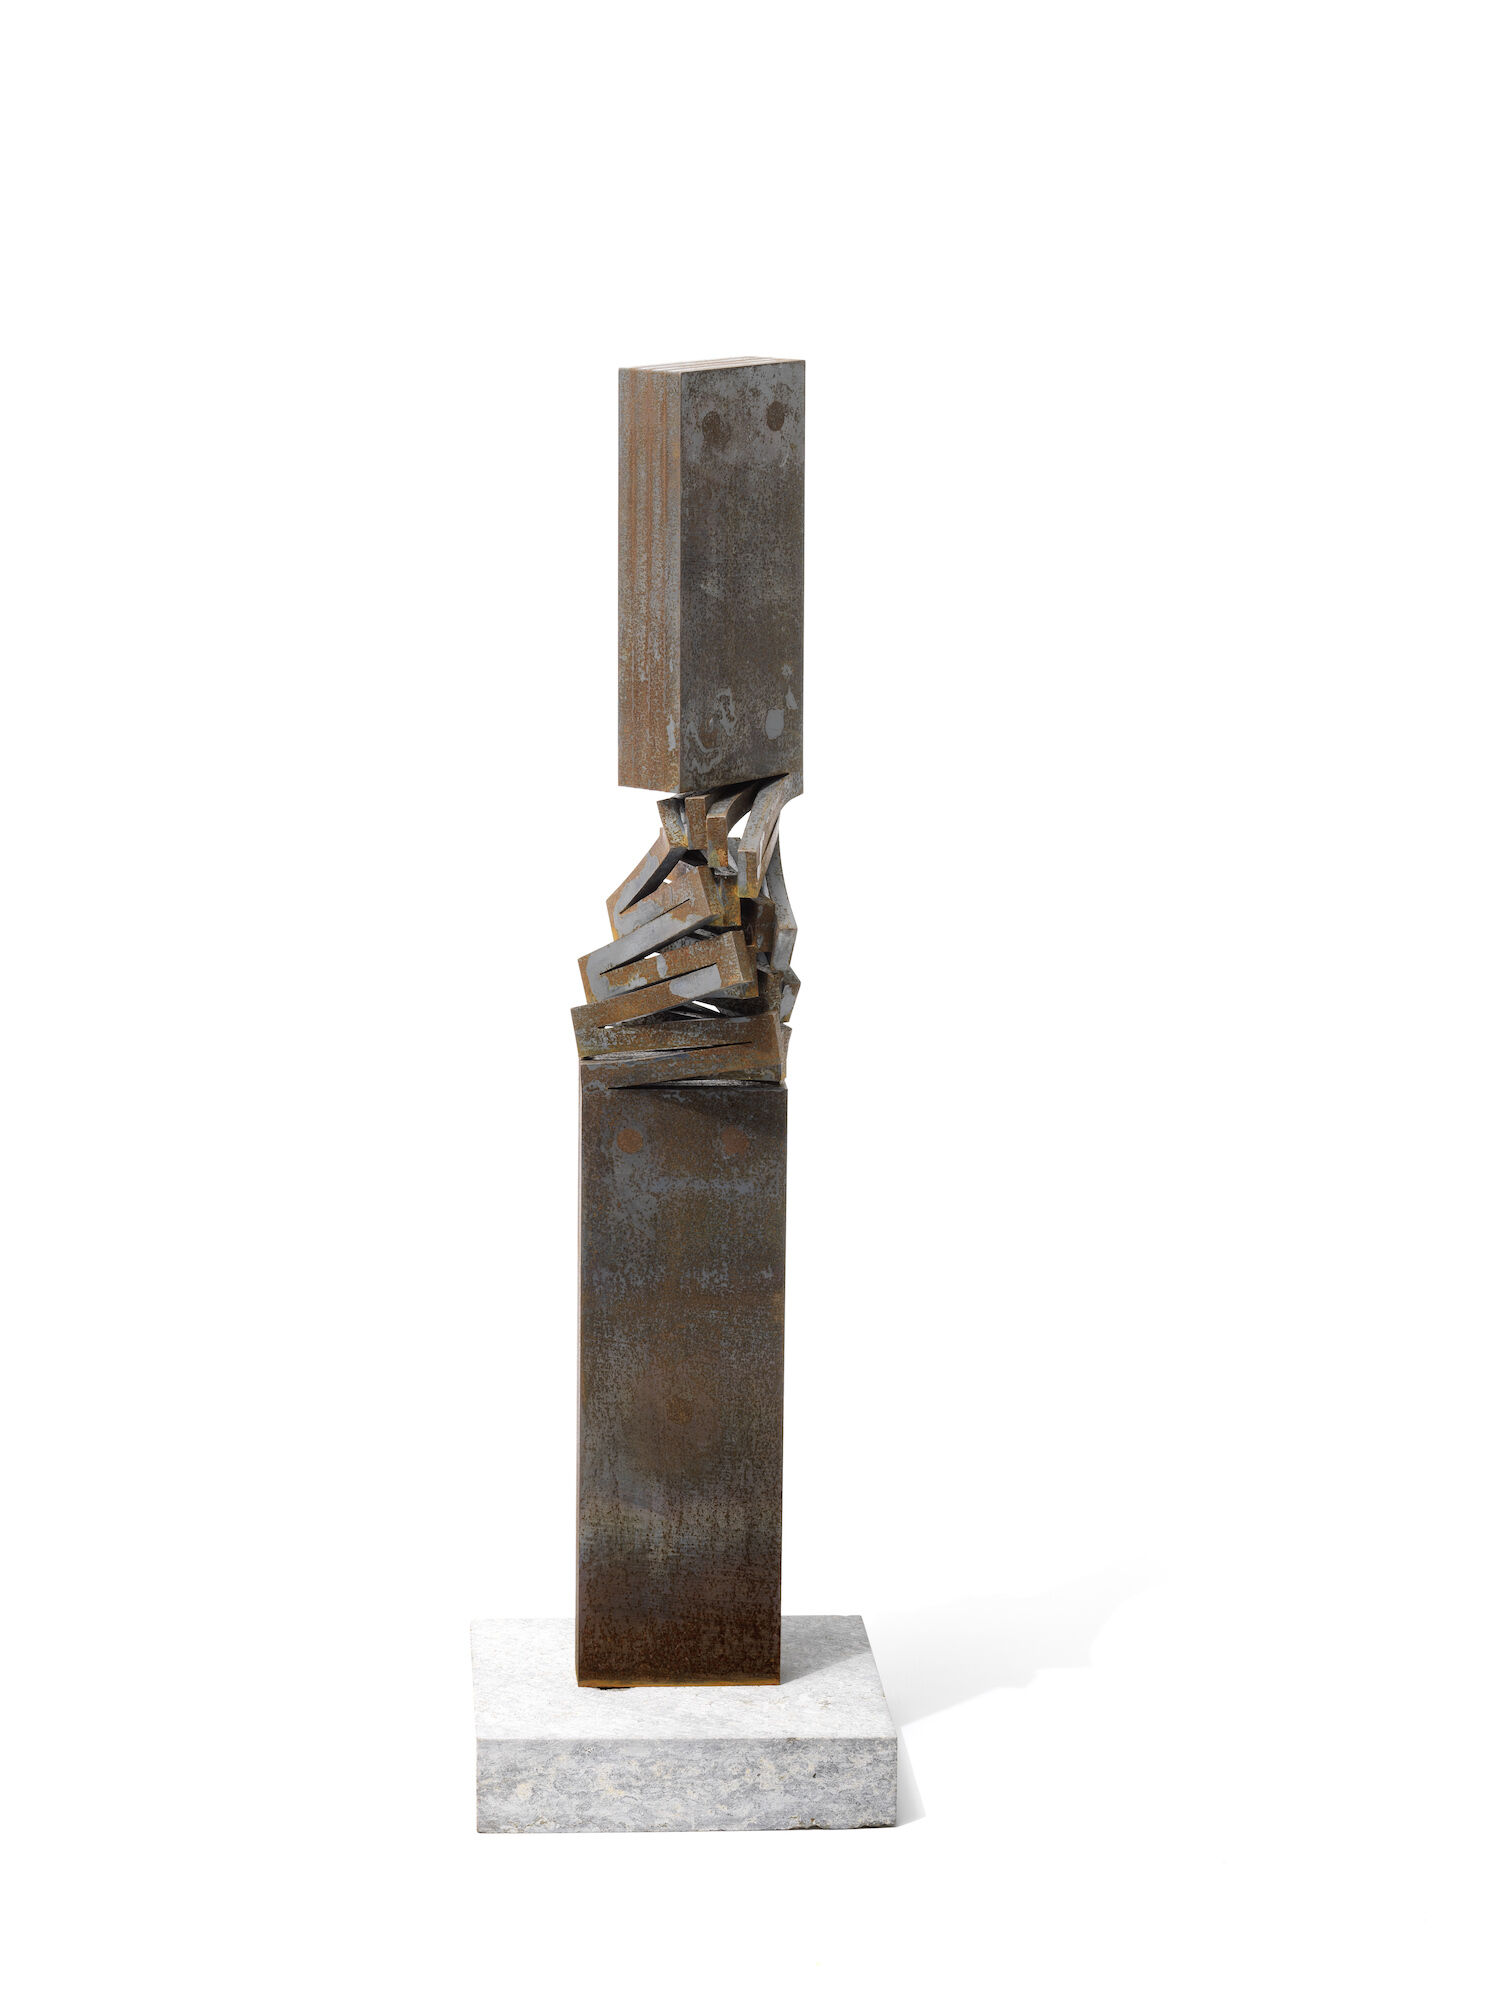 Sculpture "Rotation VII" (2019) by Thomas Röthel